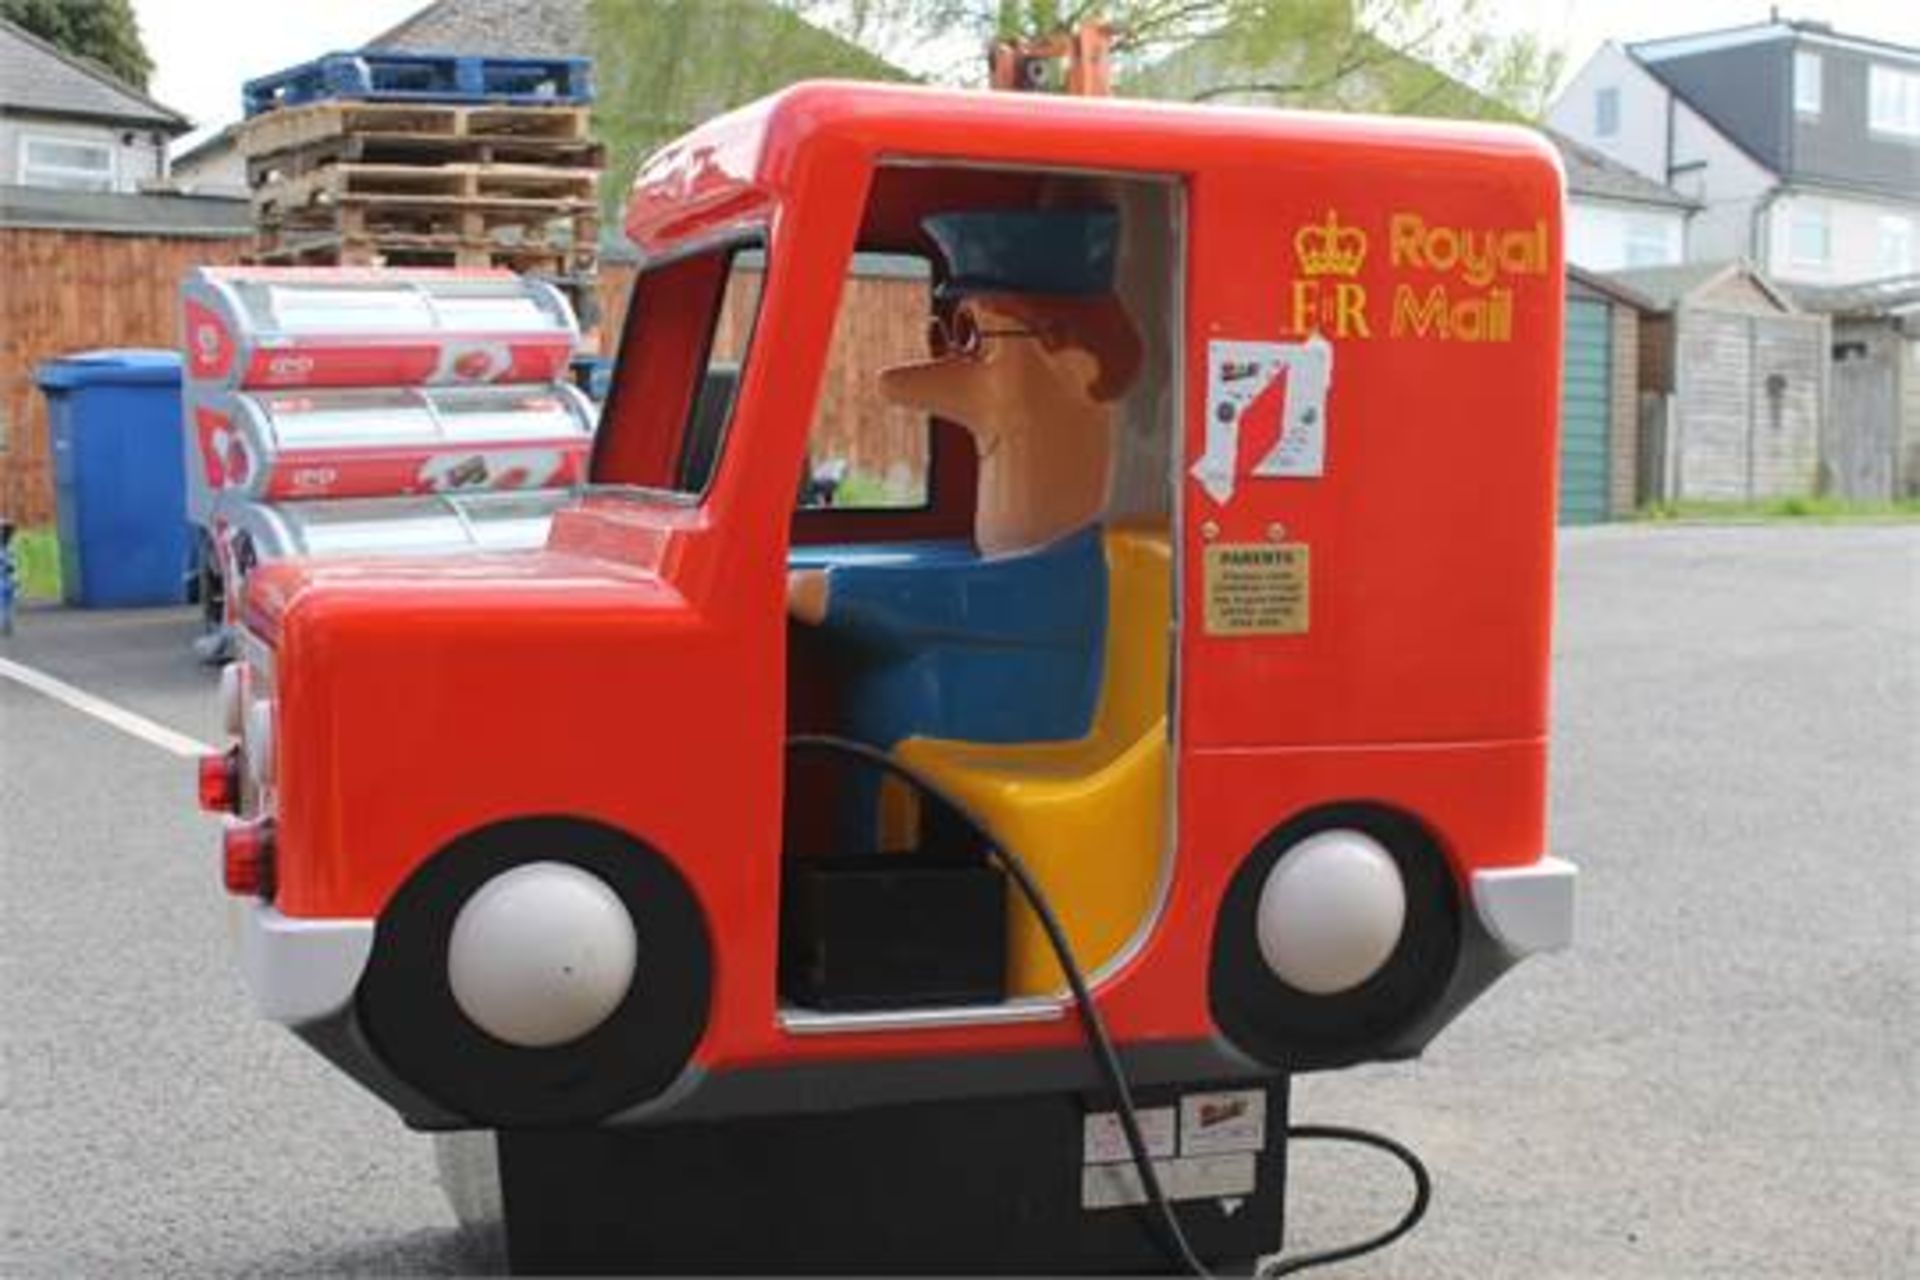 Postman Pat Child Ride – Needs attention